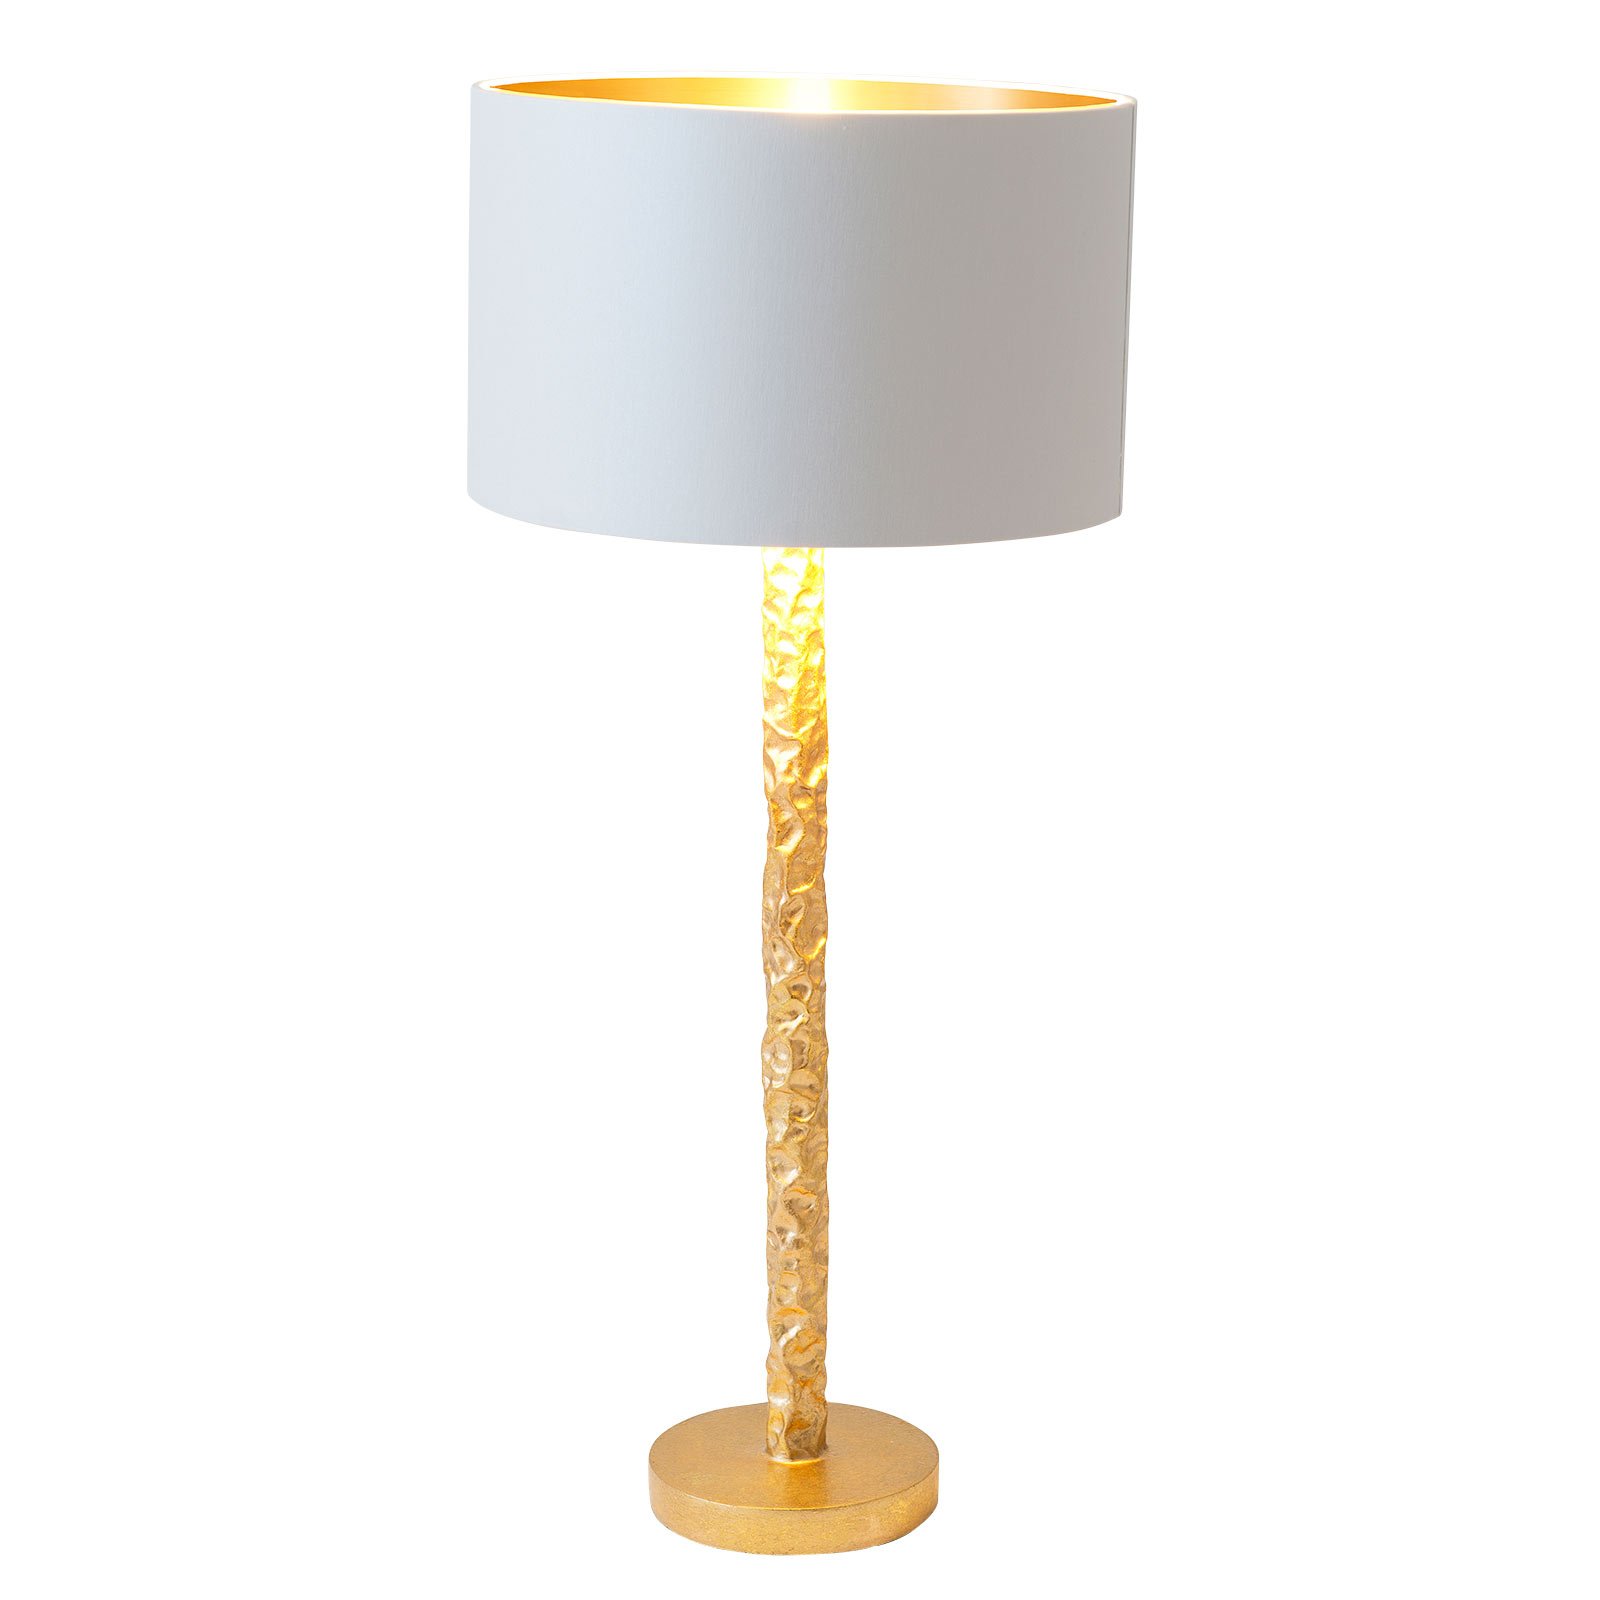 Cancelliere Rotonda table lamp white/gold 57 cm